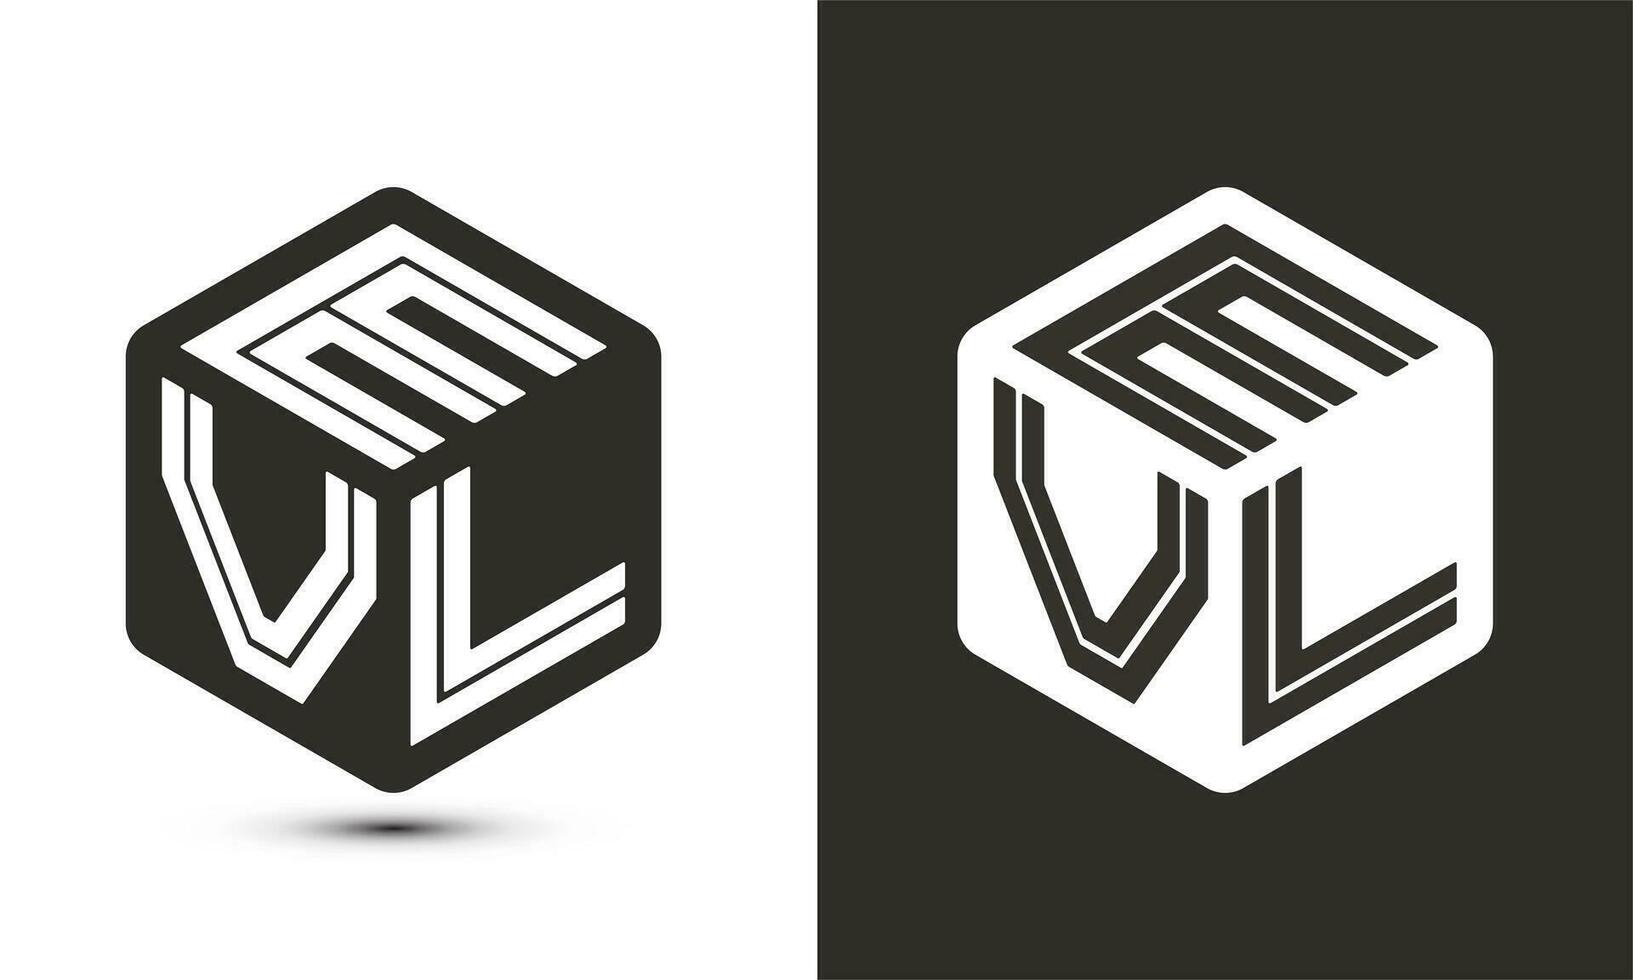 evl carta logotipo Projeto com ilustrador cubo logotipo, vetor logotipo moderno alfabeto Fonte sobreposição estilo.